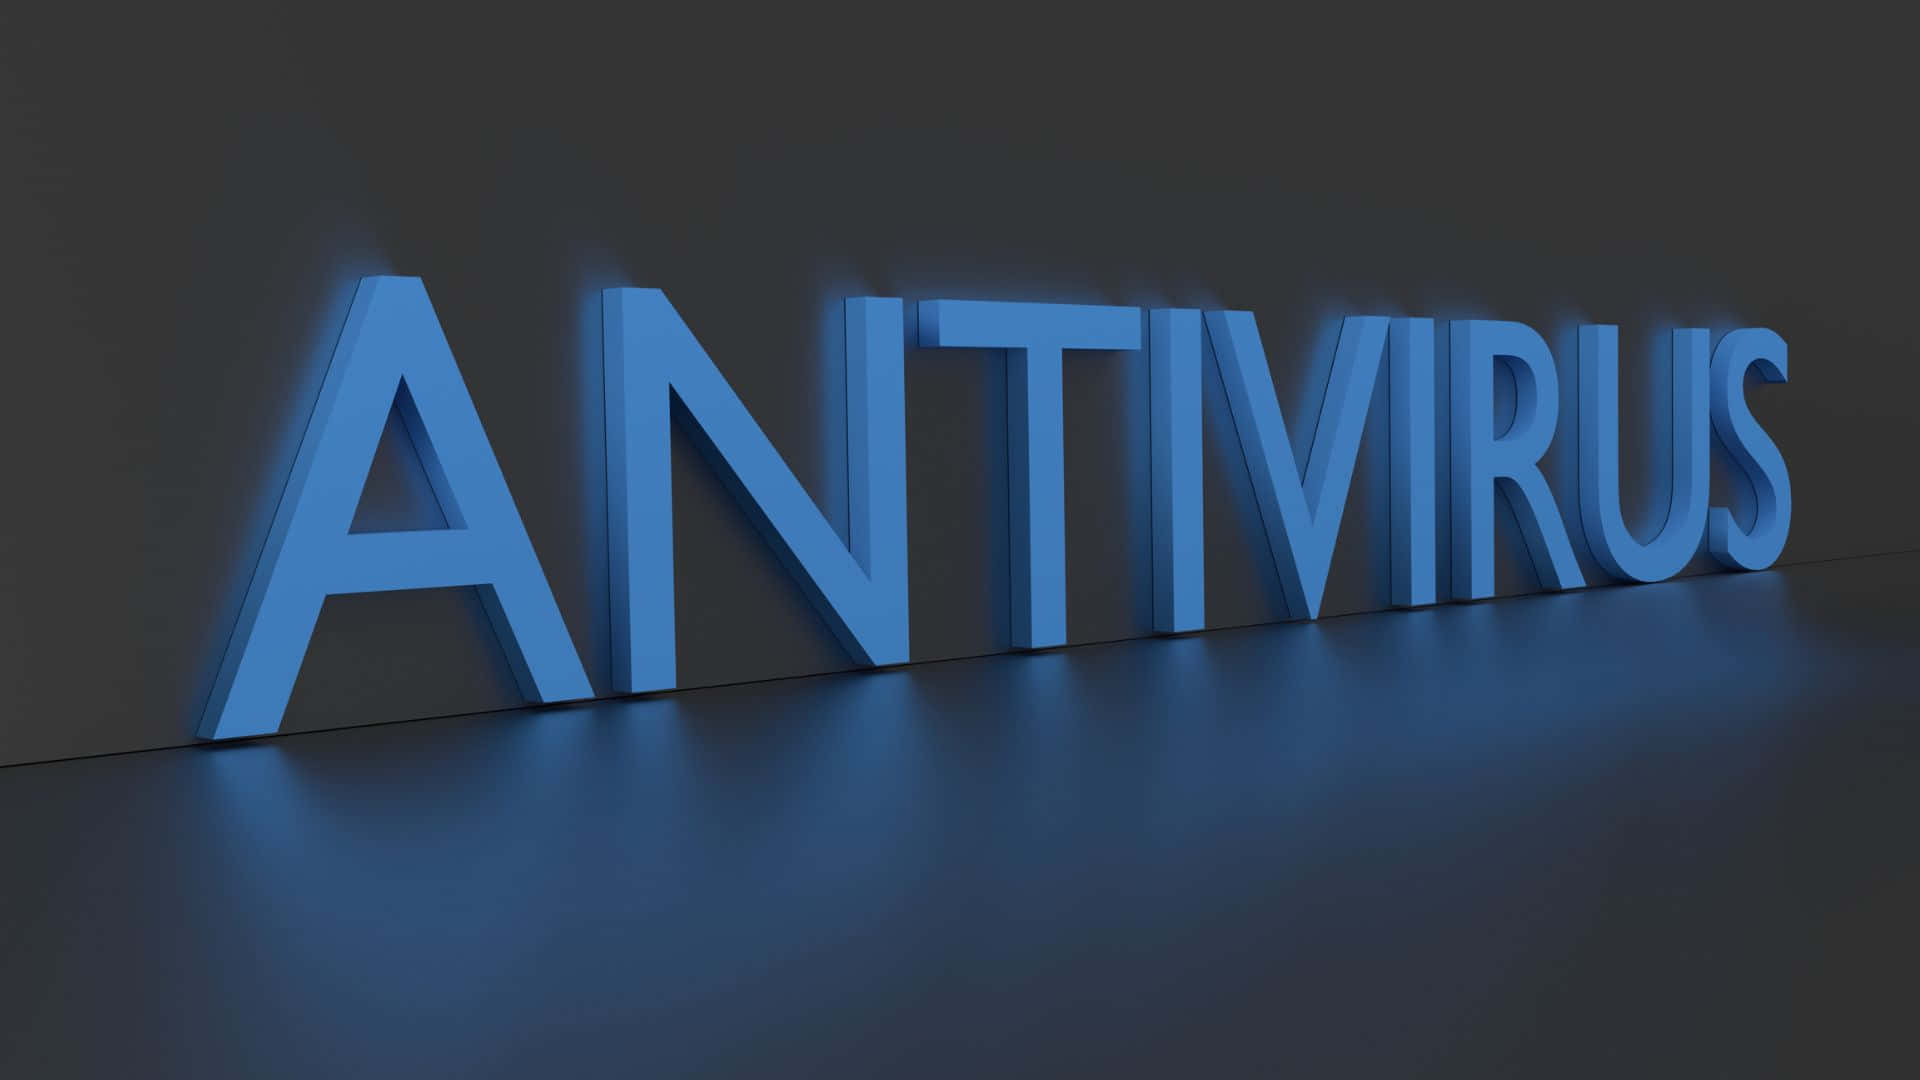 Antivirus Typography In Blue Font Wallpaper